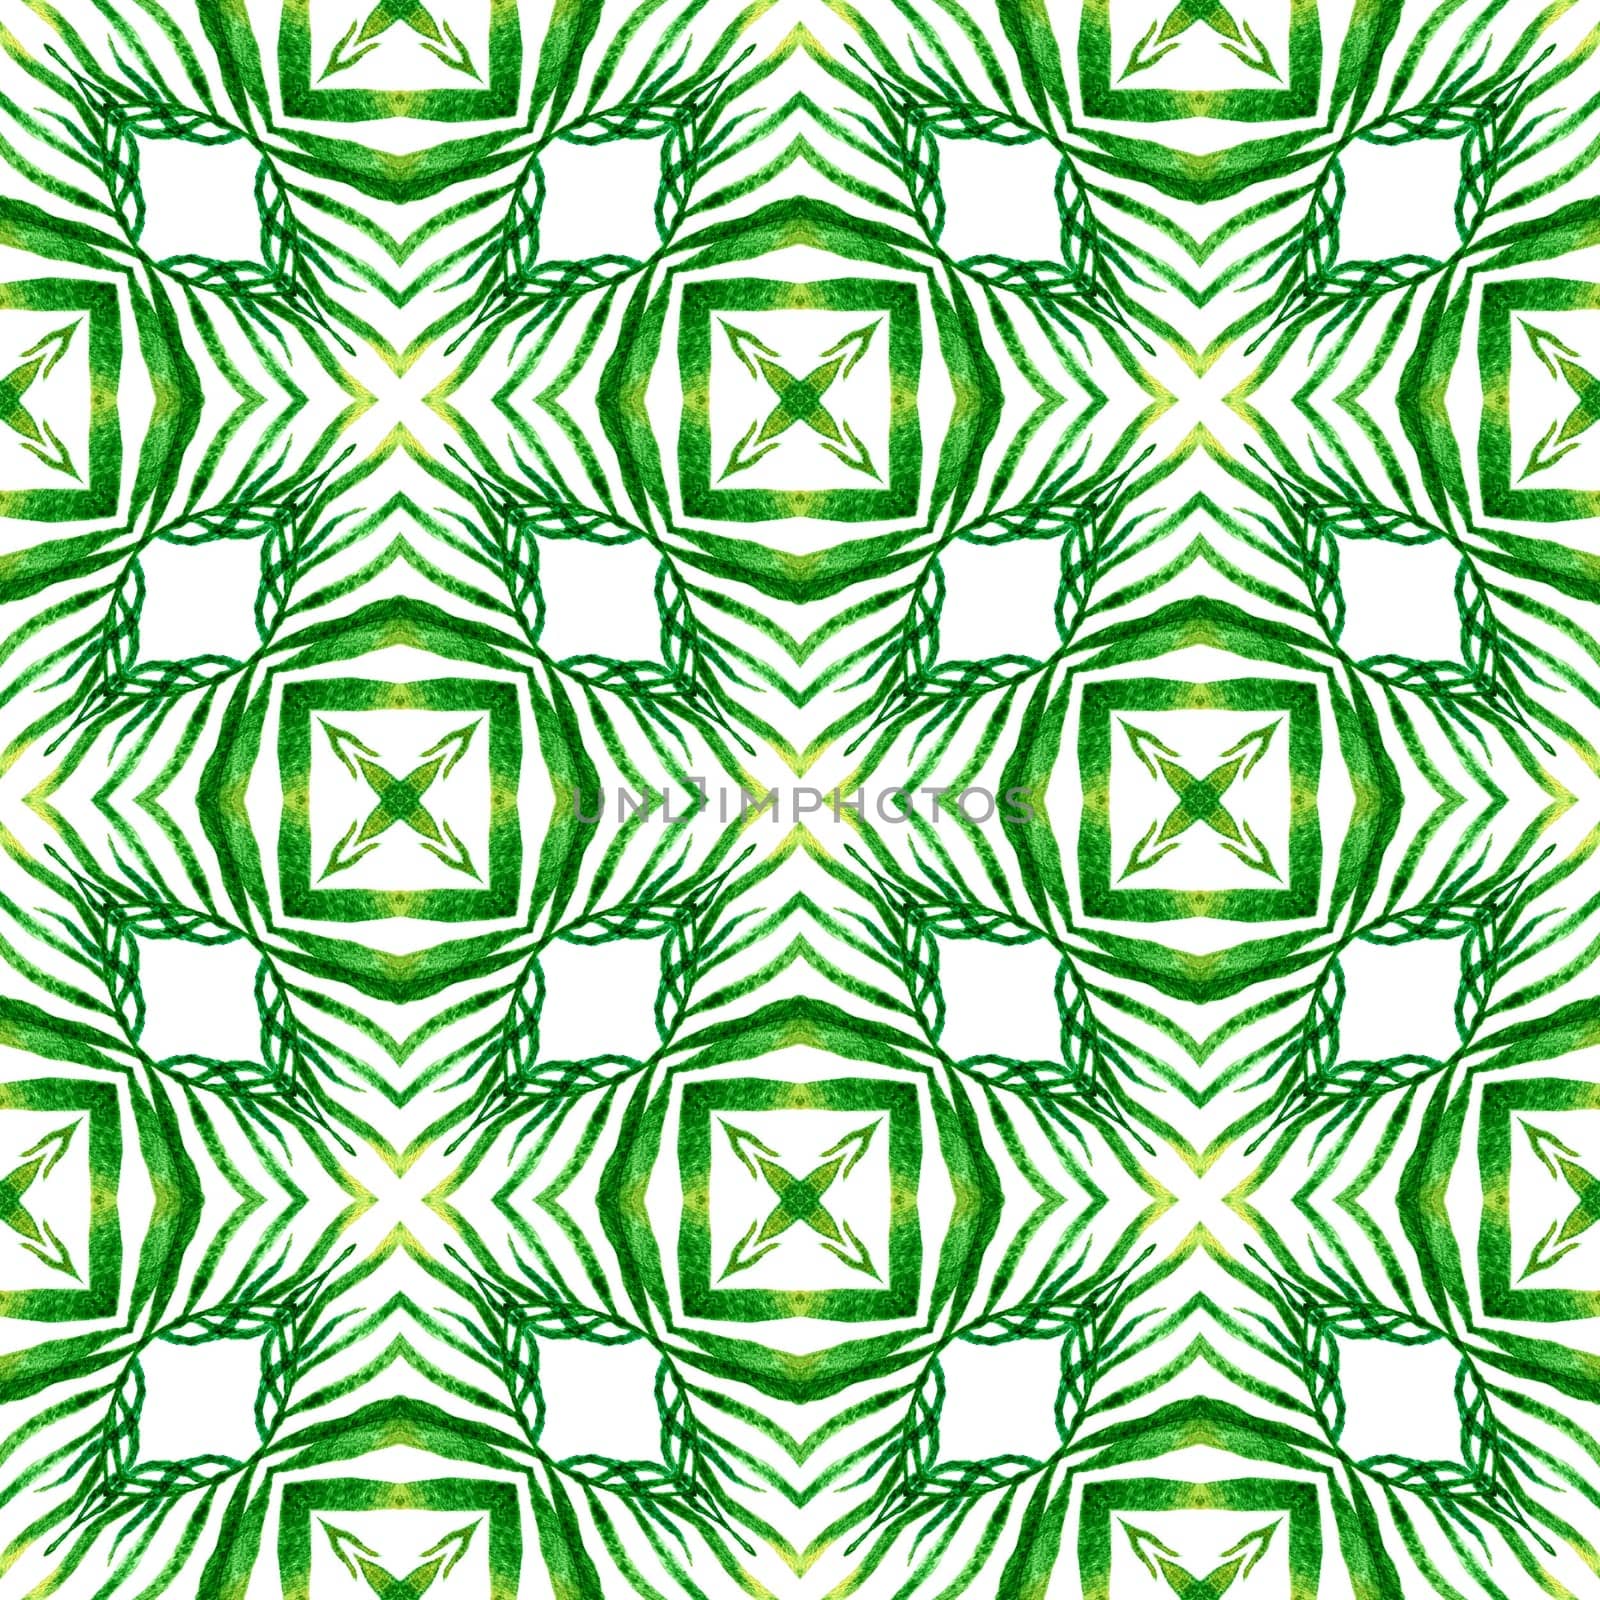 Chevron watercolor pattern. Green amazing boho chic summer design. Textile ready nice print, swimwear fabric, wallpaper, wrapping. Green geometric chevron watercolor border.